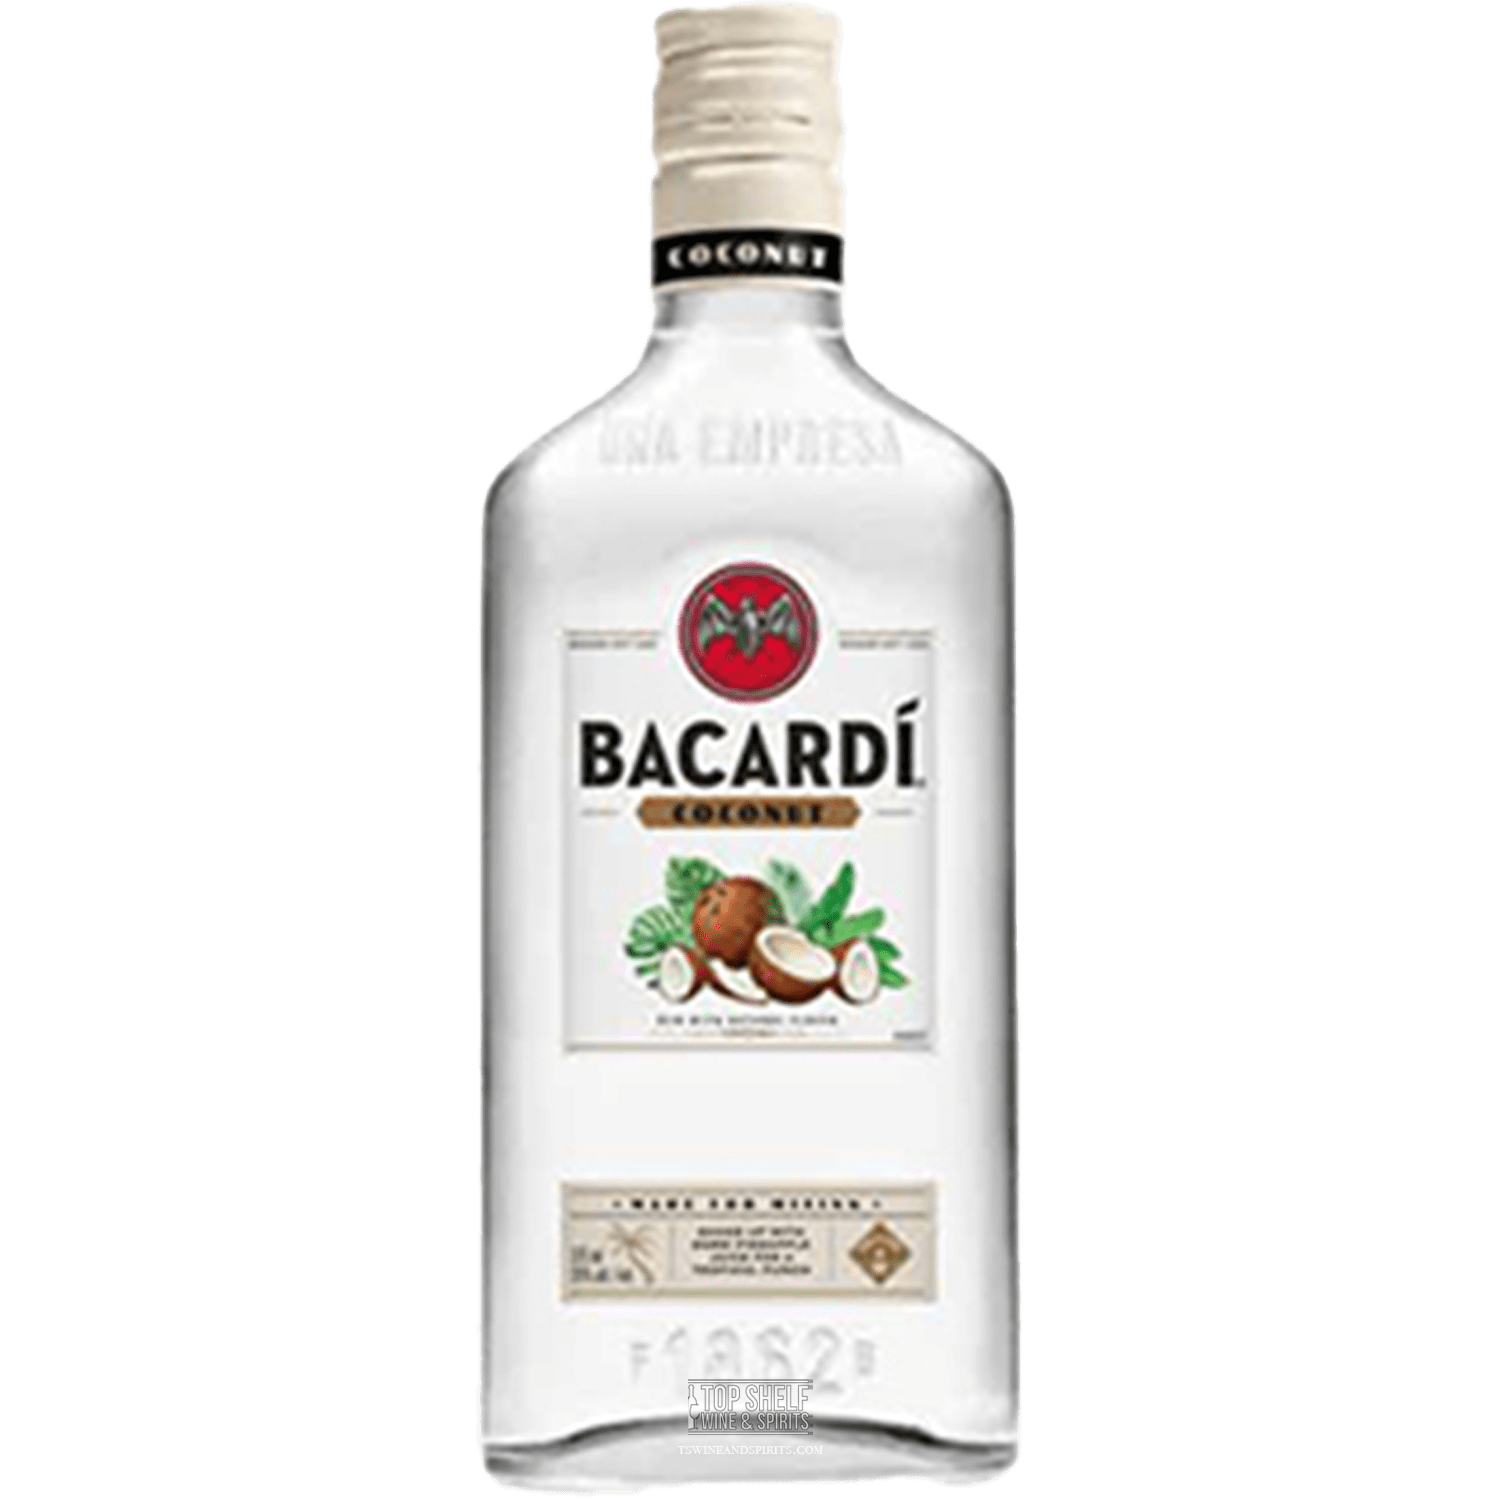 Bacardi – Coconut 375mL